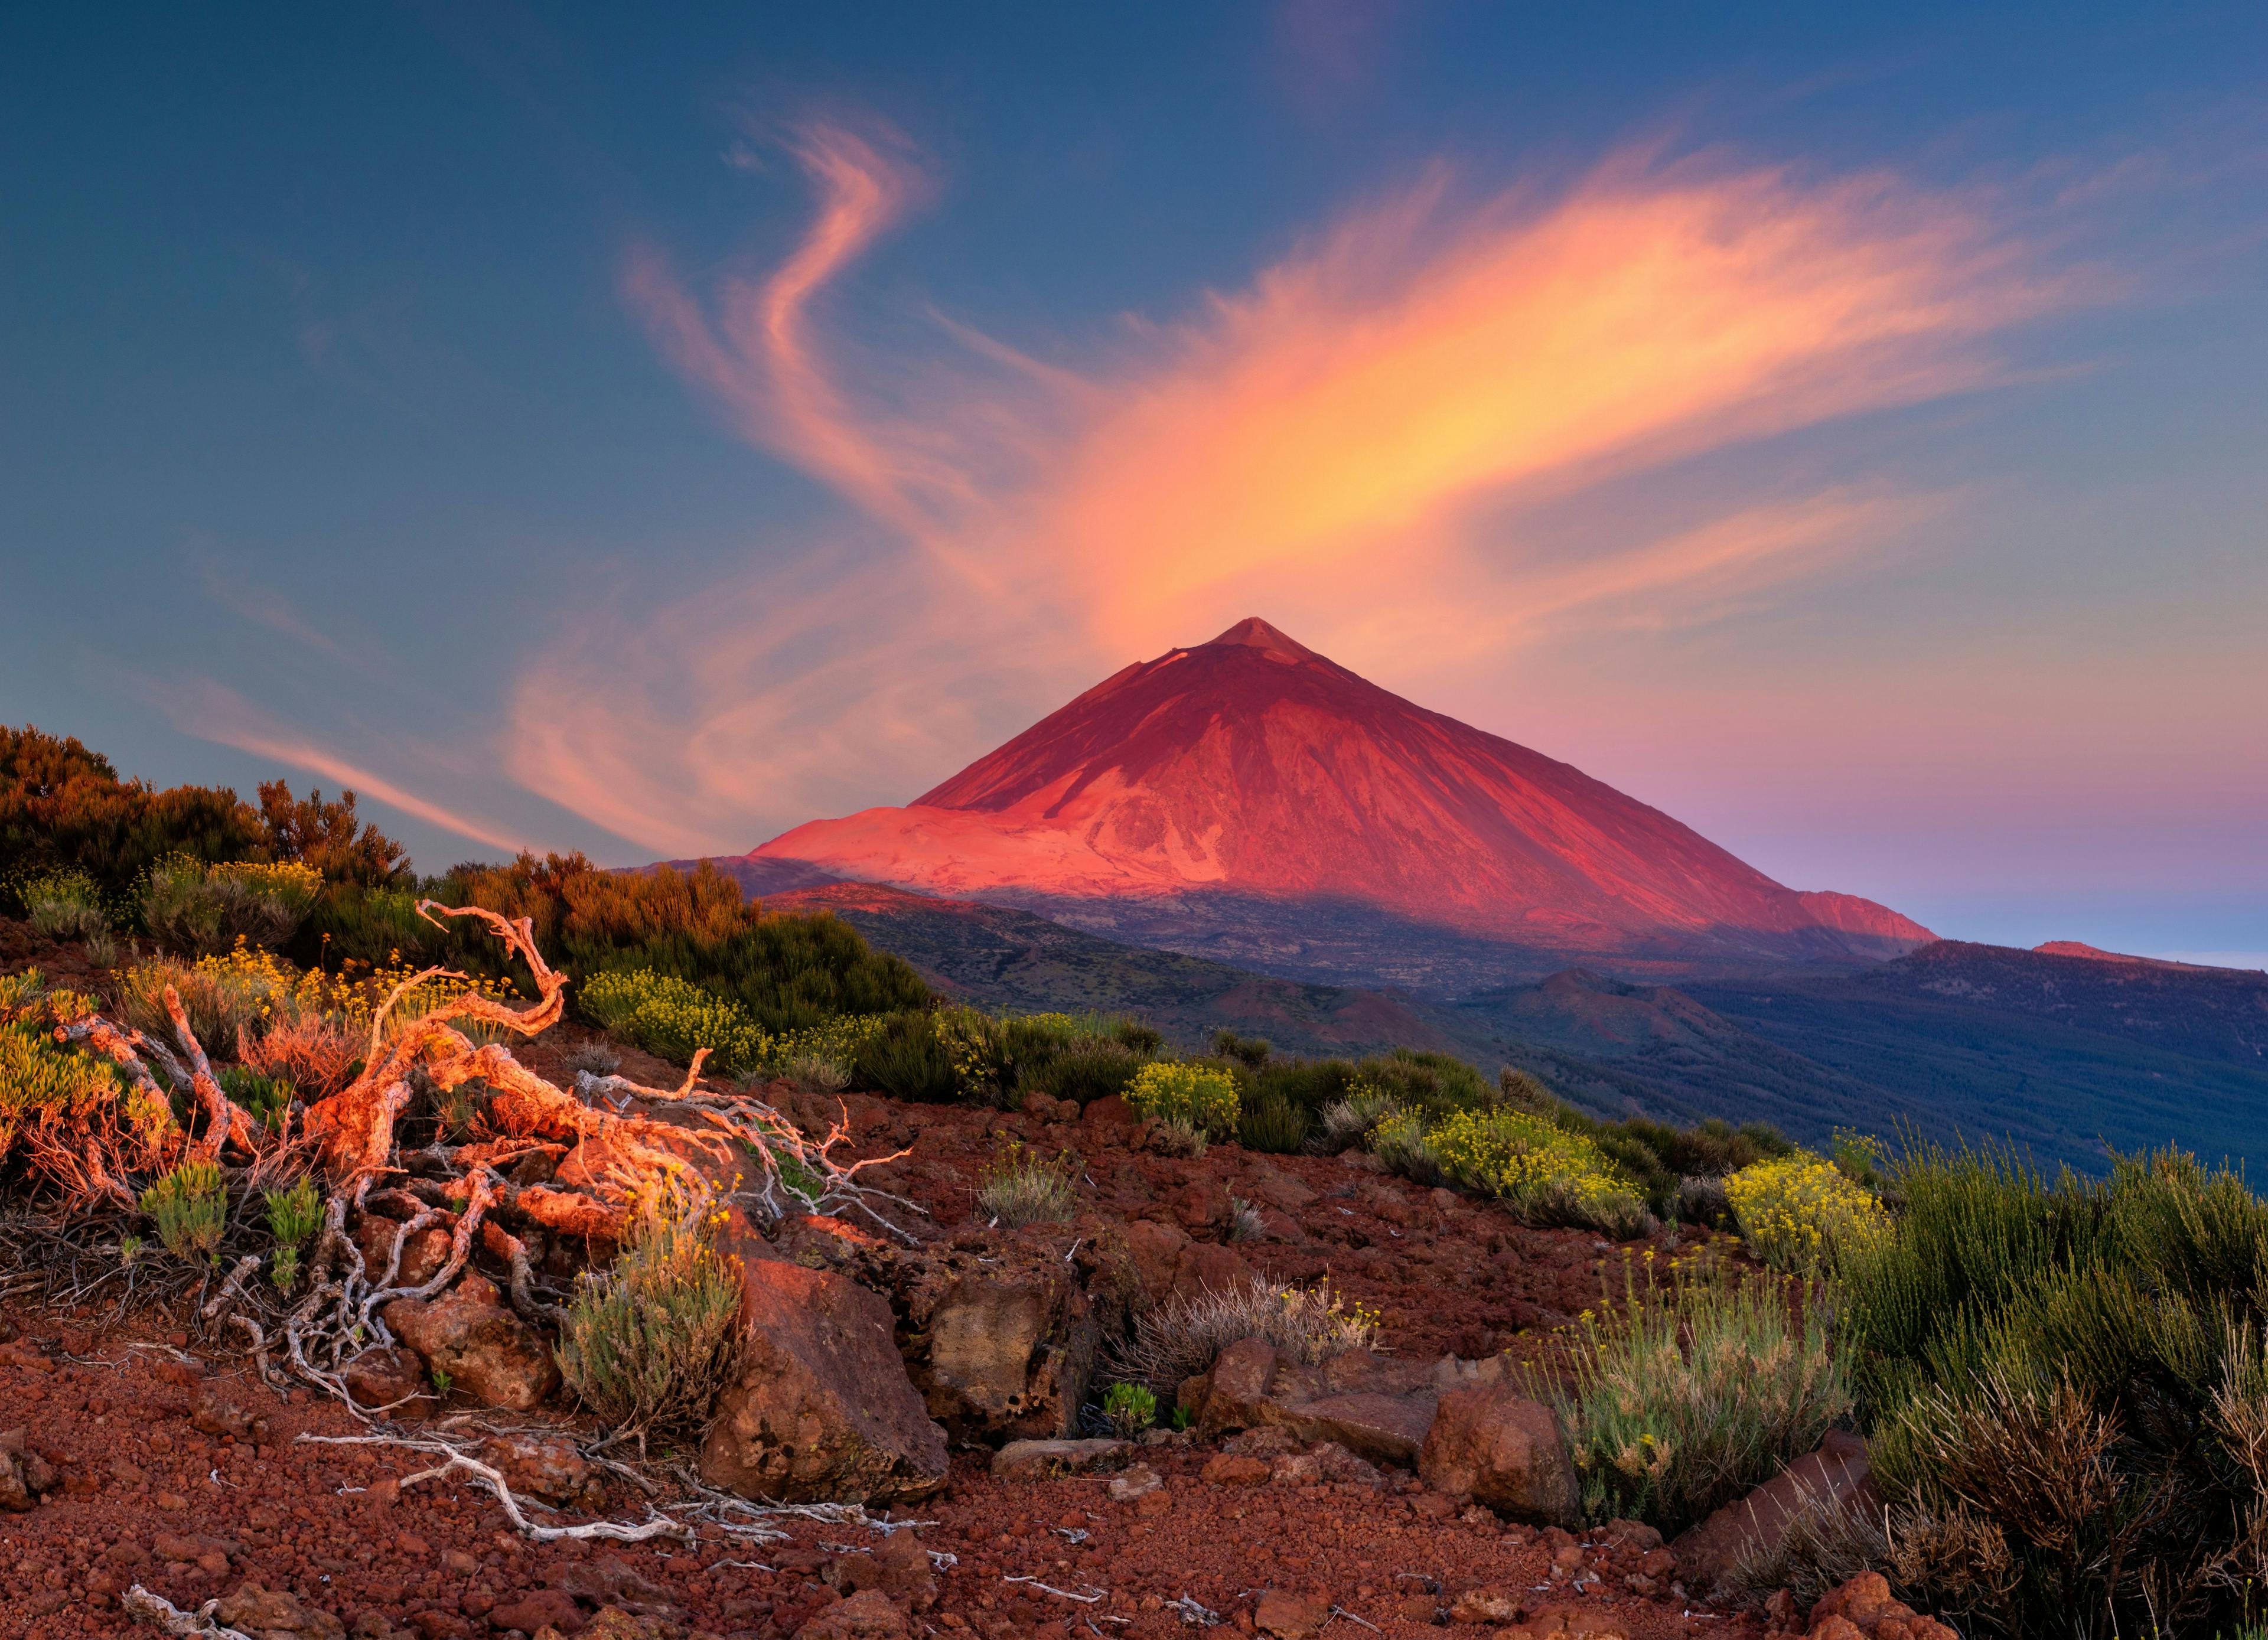 Teide volcano in Tenerife in the light of the rising sun | Image Credit: © Helena Coppola - stock.adobe.com